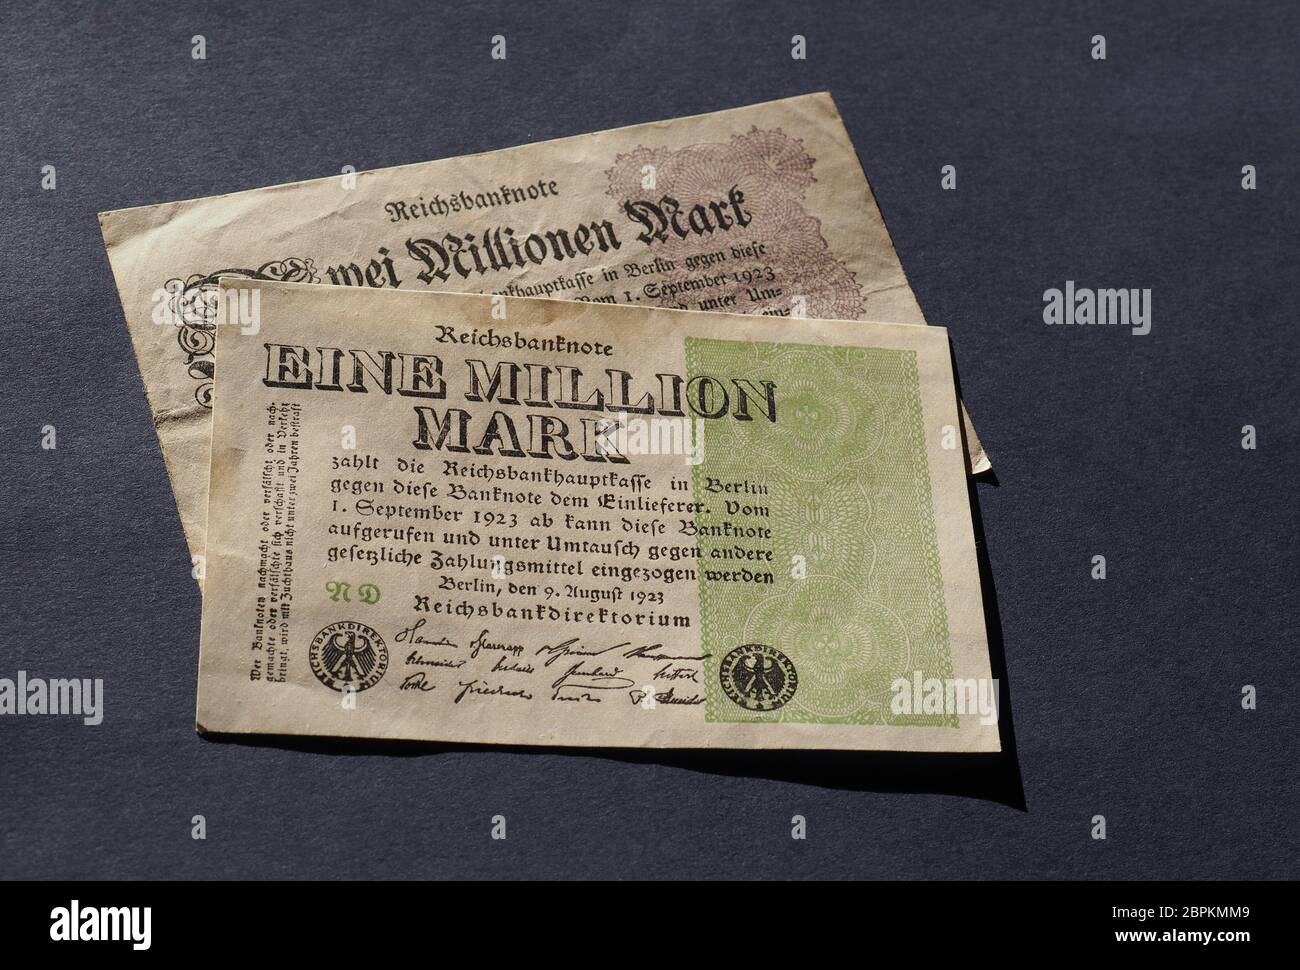 Eine und Zwei Million Mark (meaning One and Two Million Mark) year 1923 banknotes inflation money from Weimar Republic Stock Photo